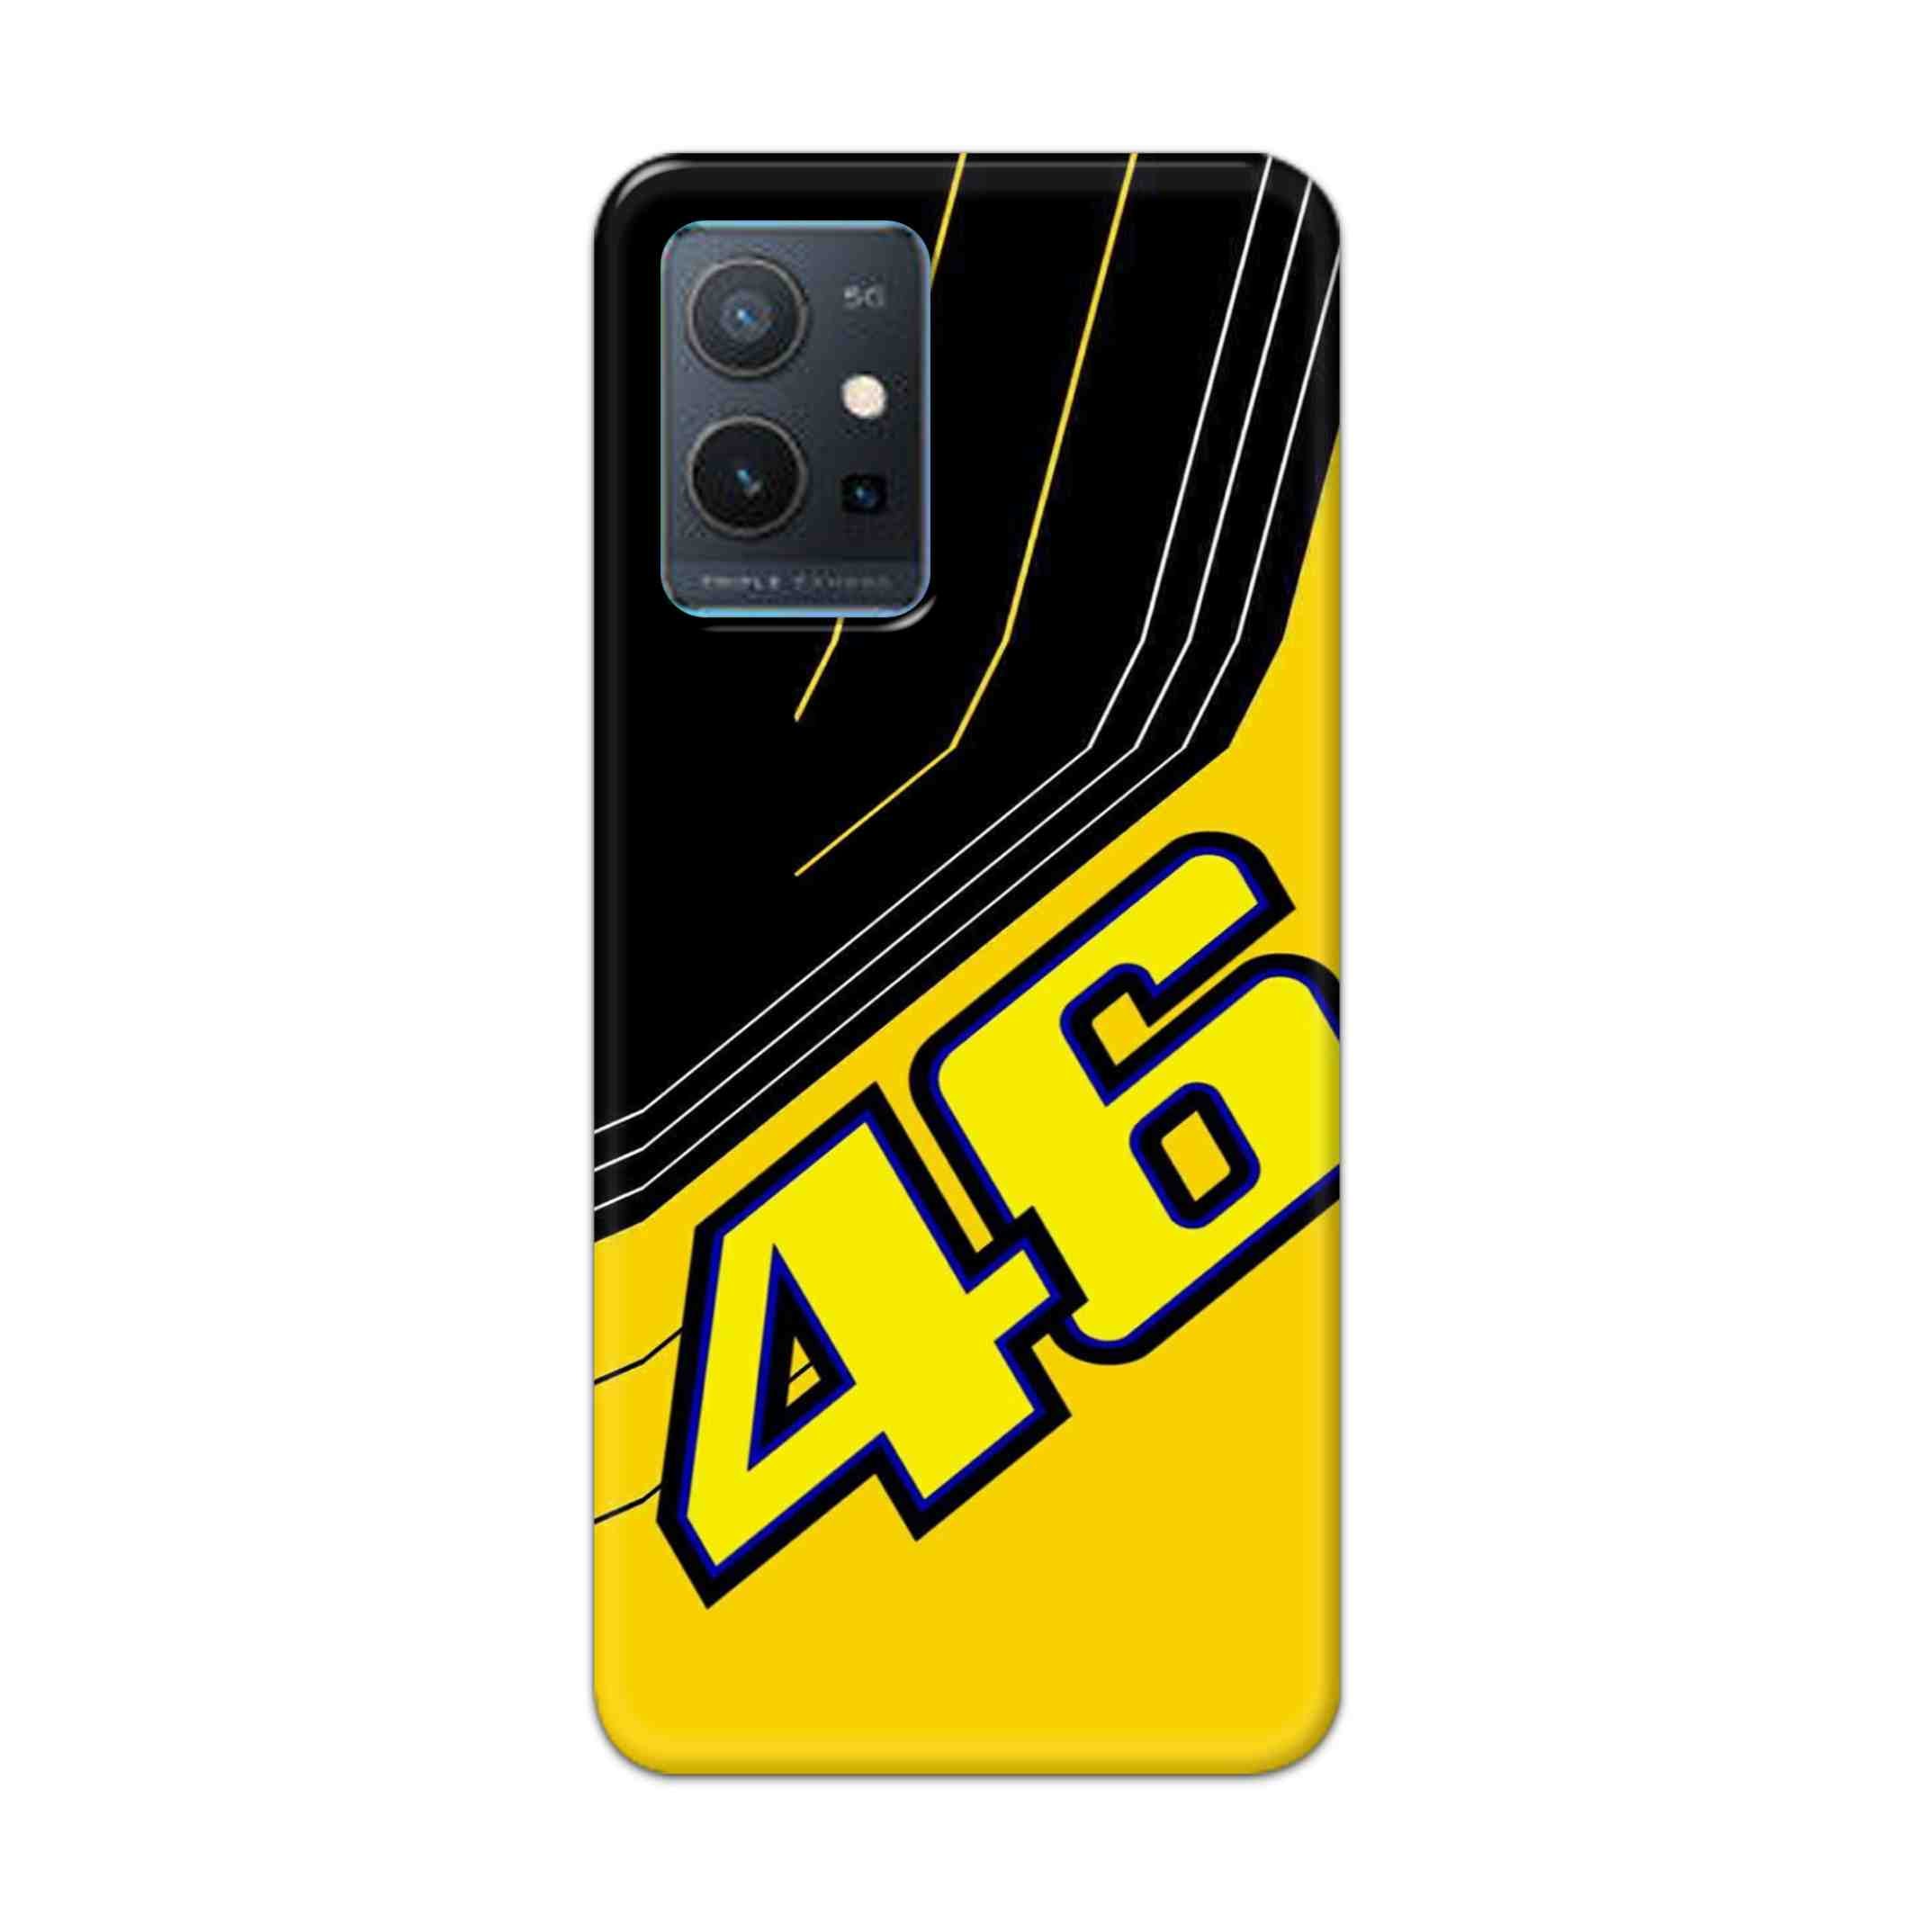 Buy 46 Hard Back Mobile Phone Case Cover For Vivo Y75 5G Online